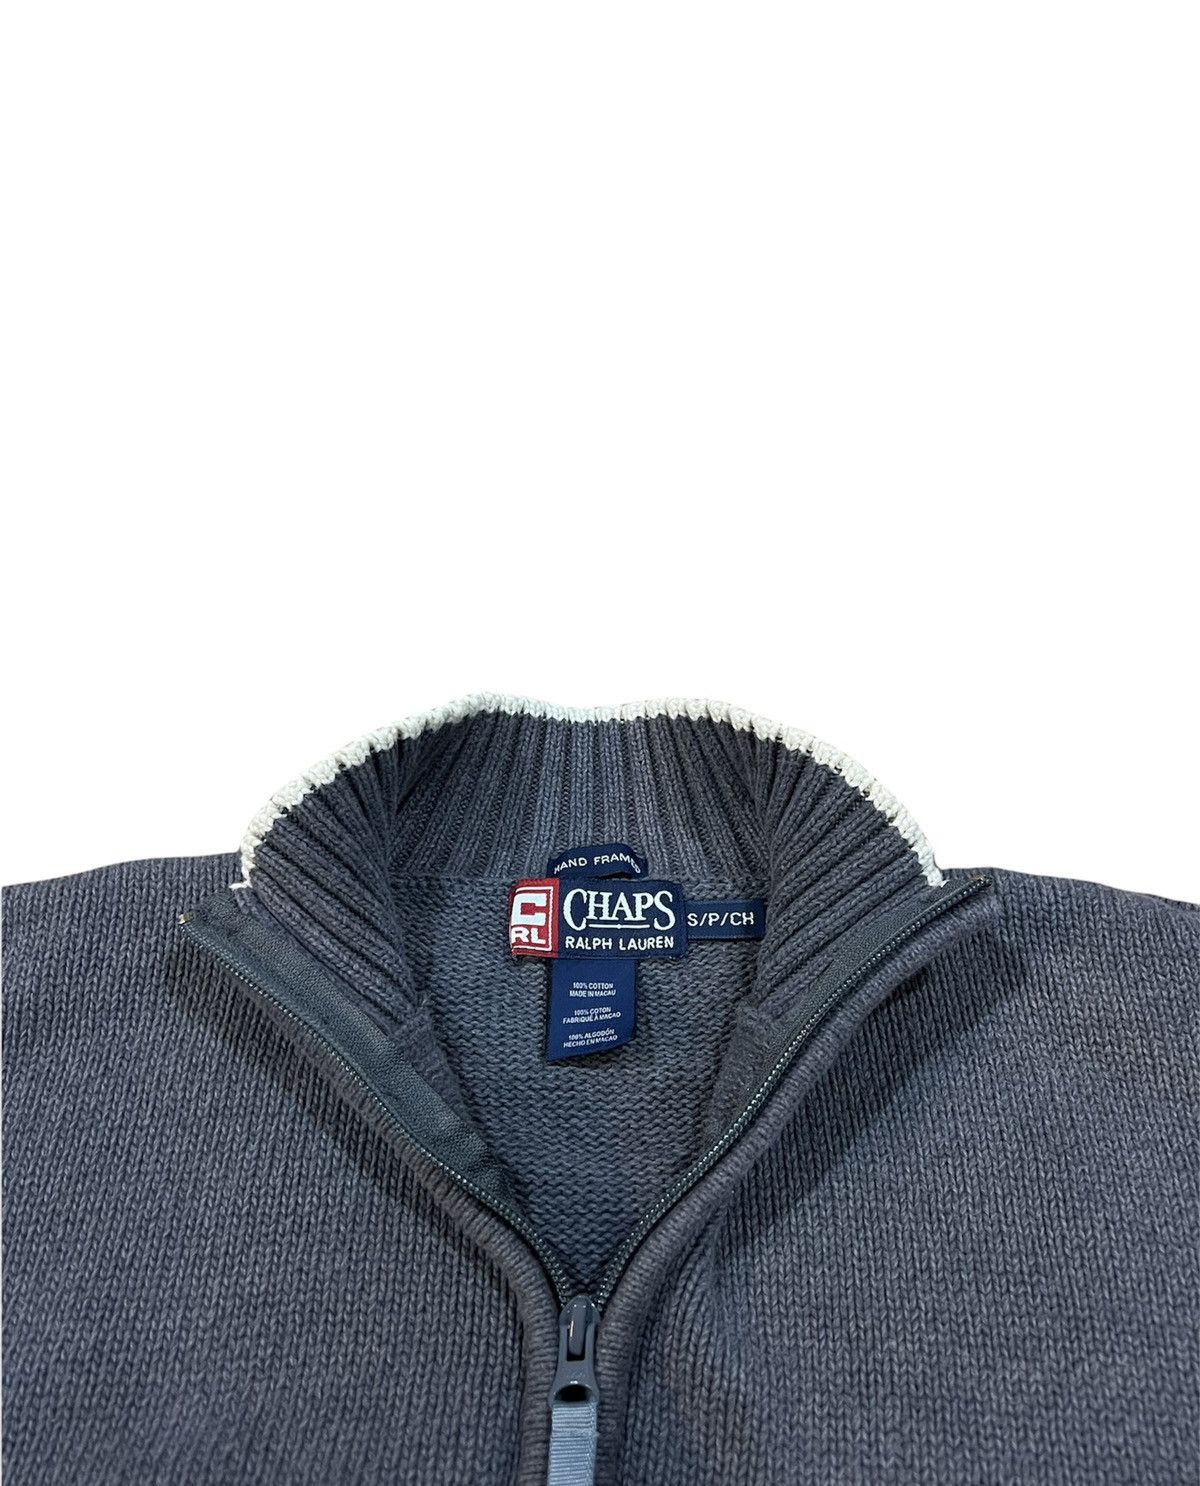 Vintage Vintage Chaps Ralph Lauren Half Zip Pullover Sweatshirt Size US M / EU 48-50 / 2 - 3 Preview